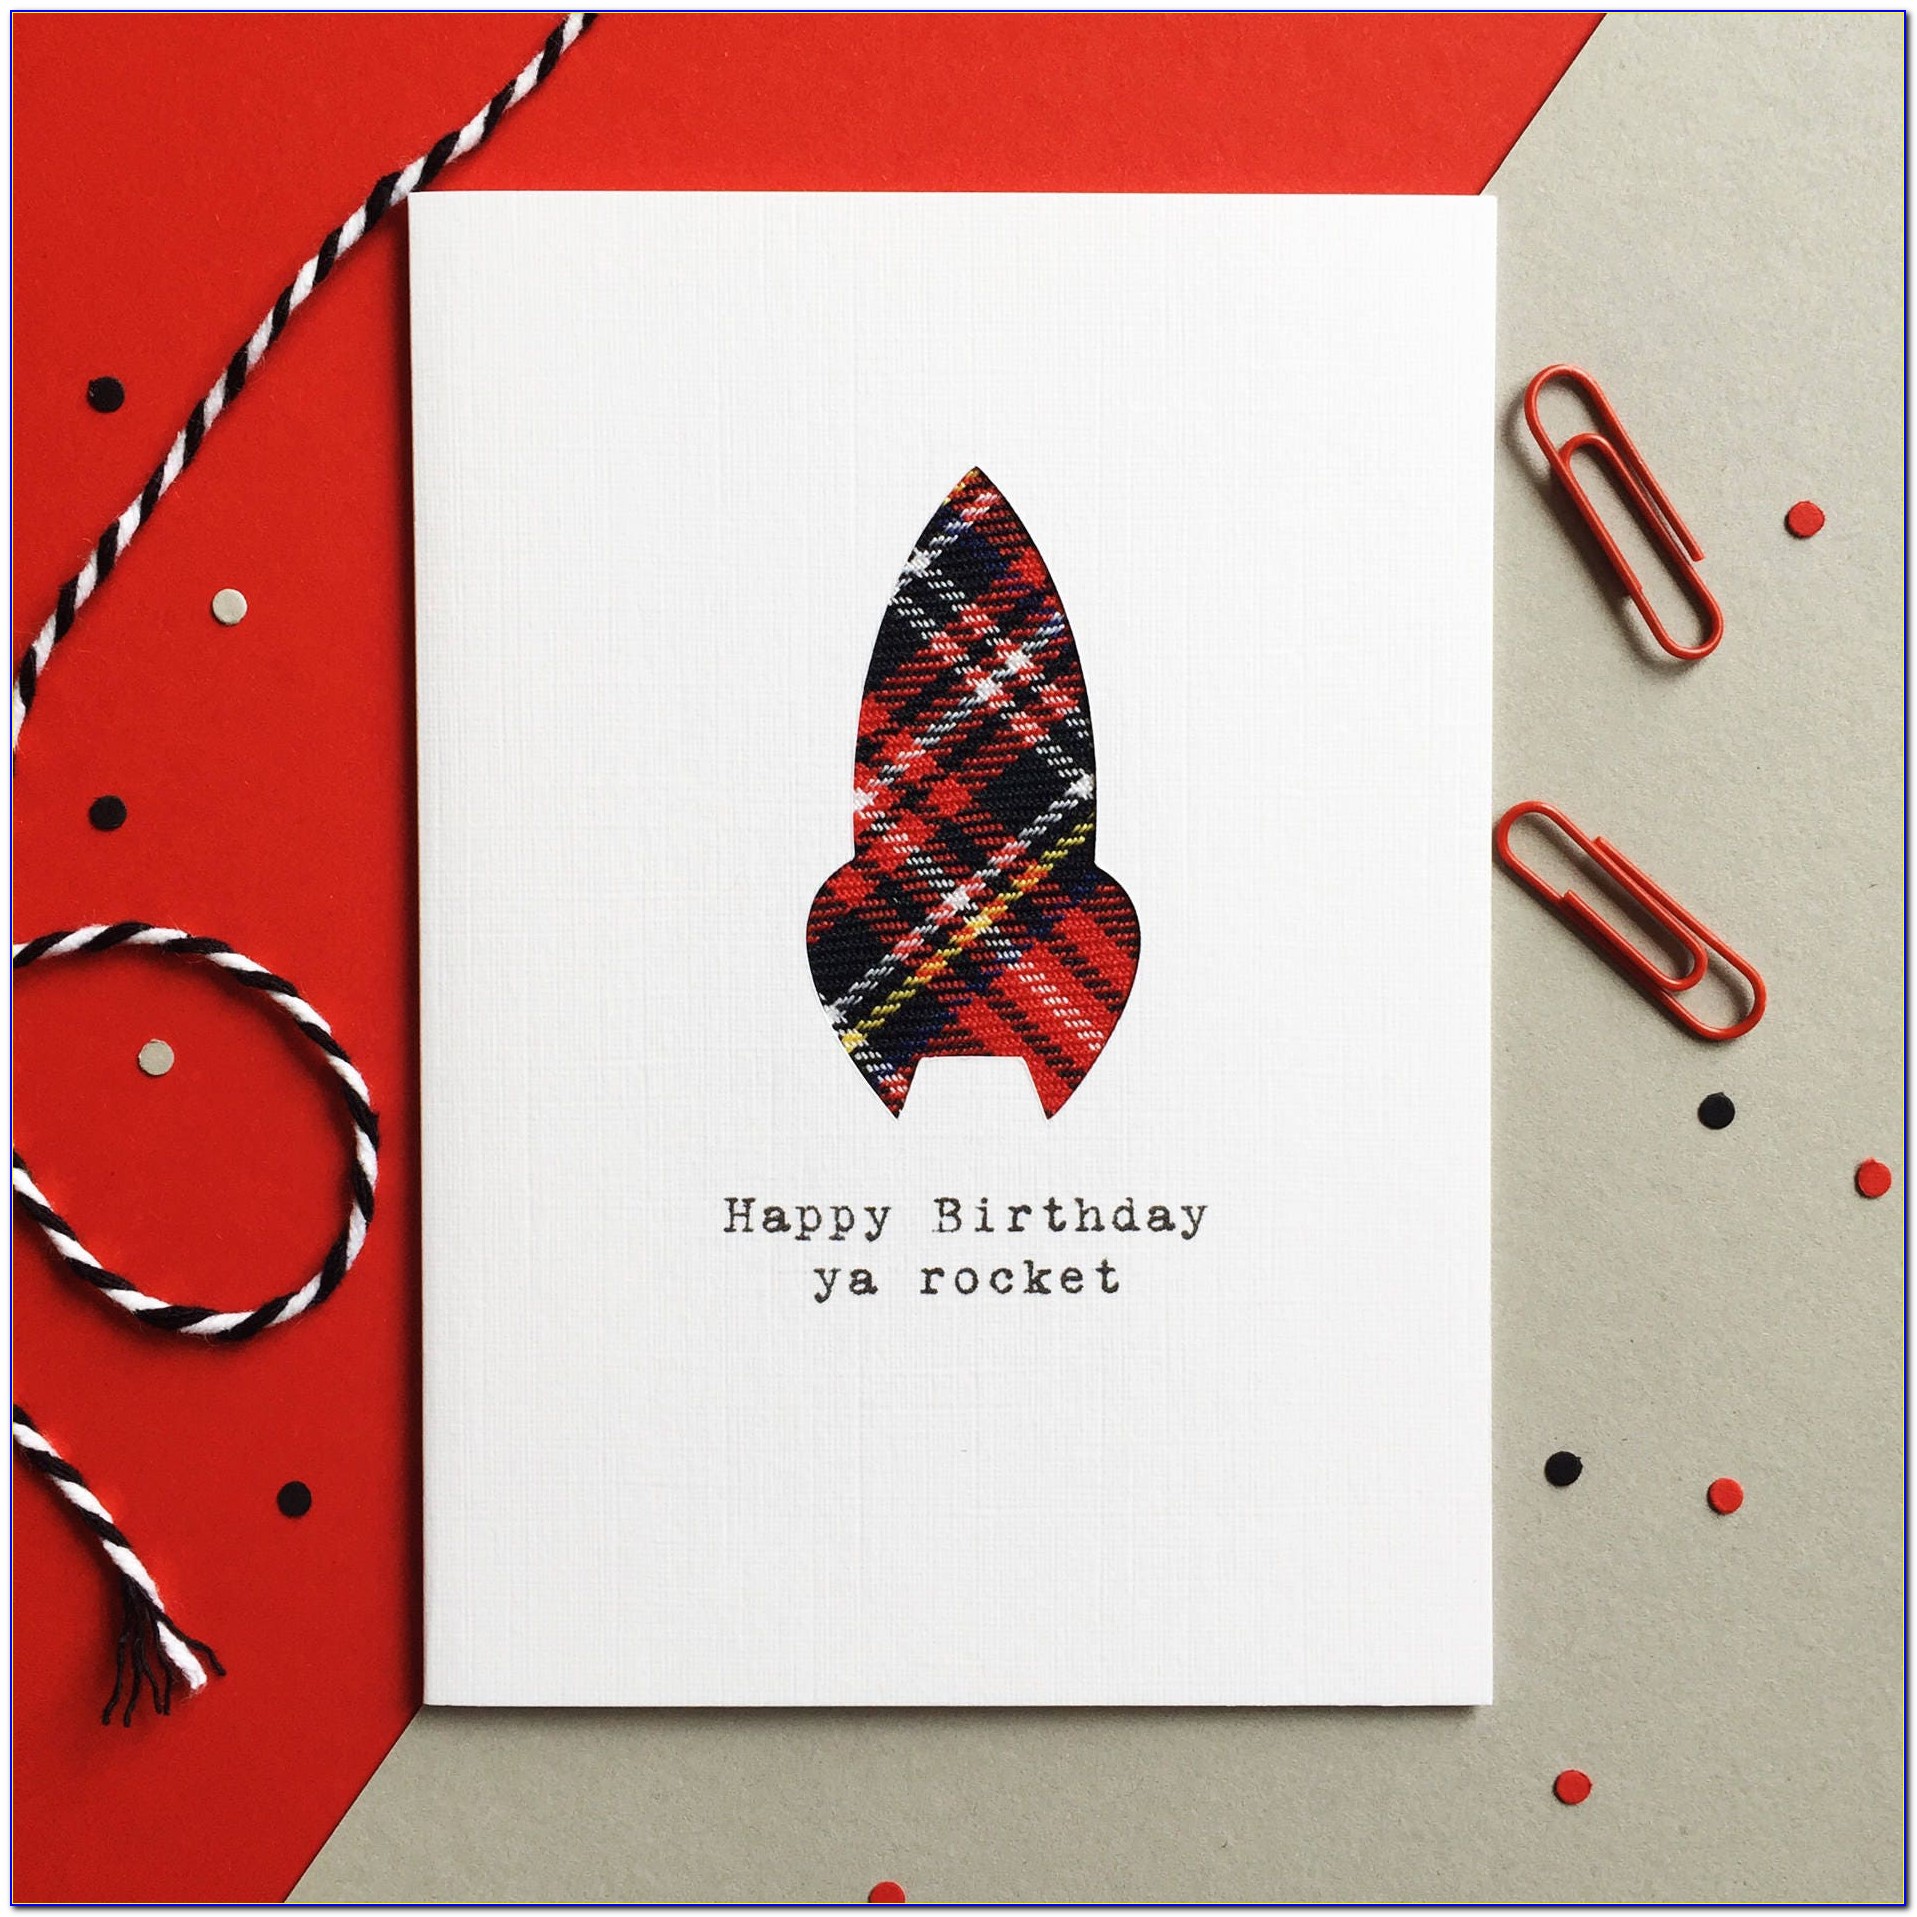 Scottish Terrier Birthday Cards